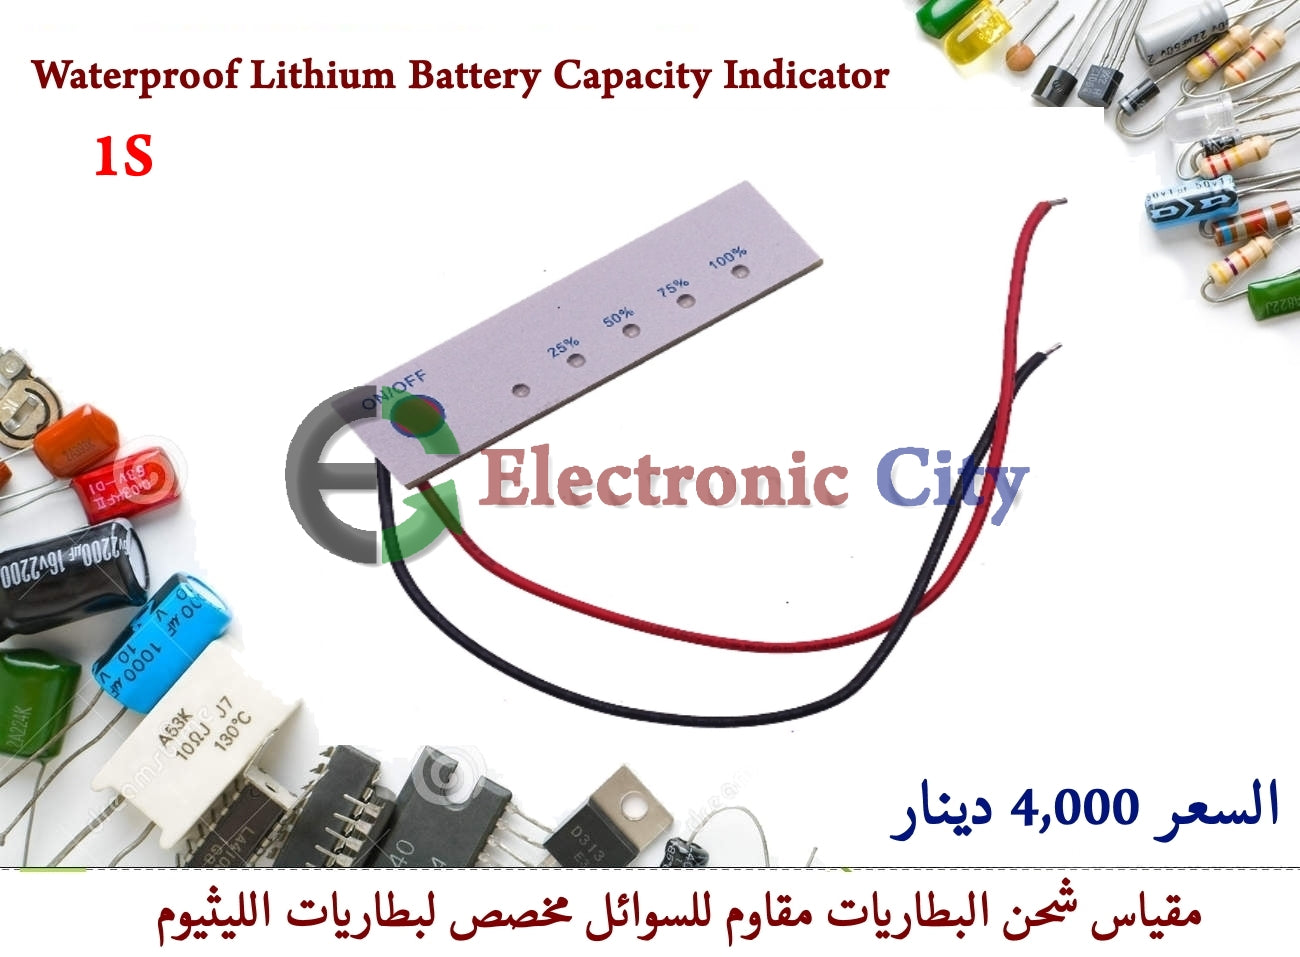 Waterproof Lithium Battery Capacity Indicator 1S #F3 011125